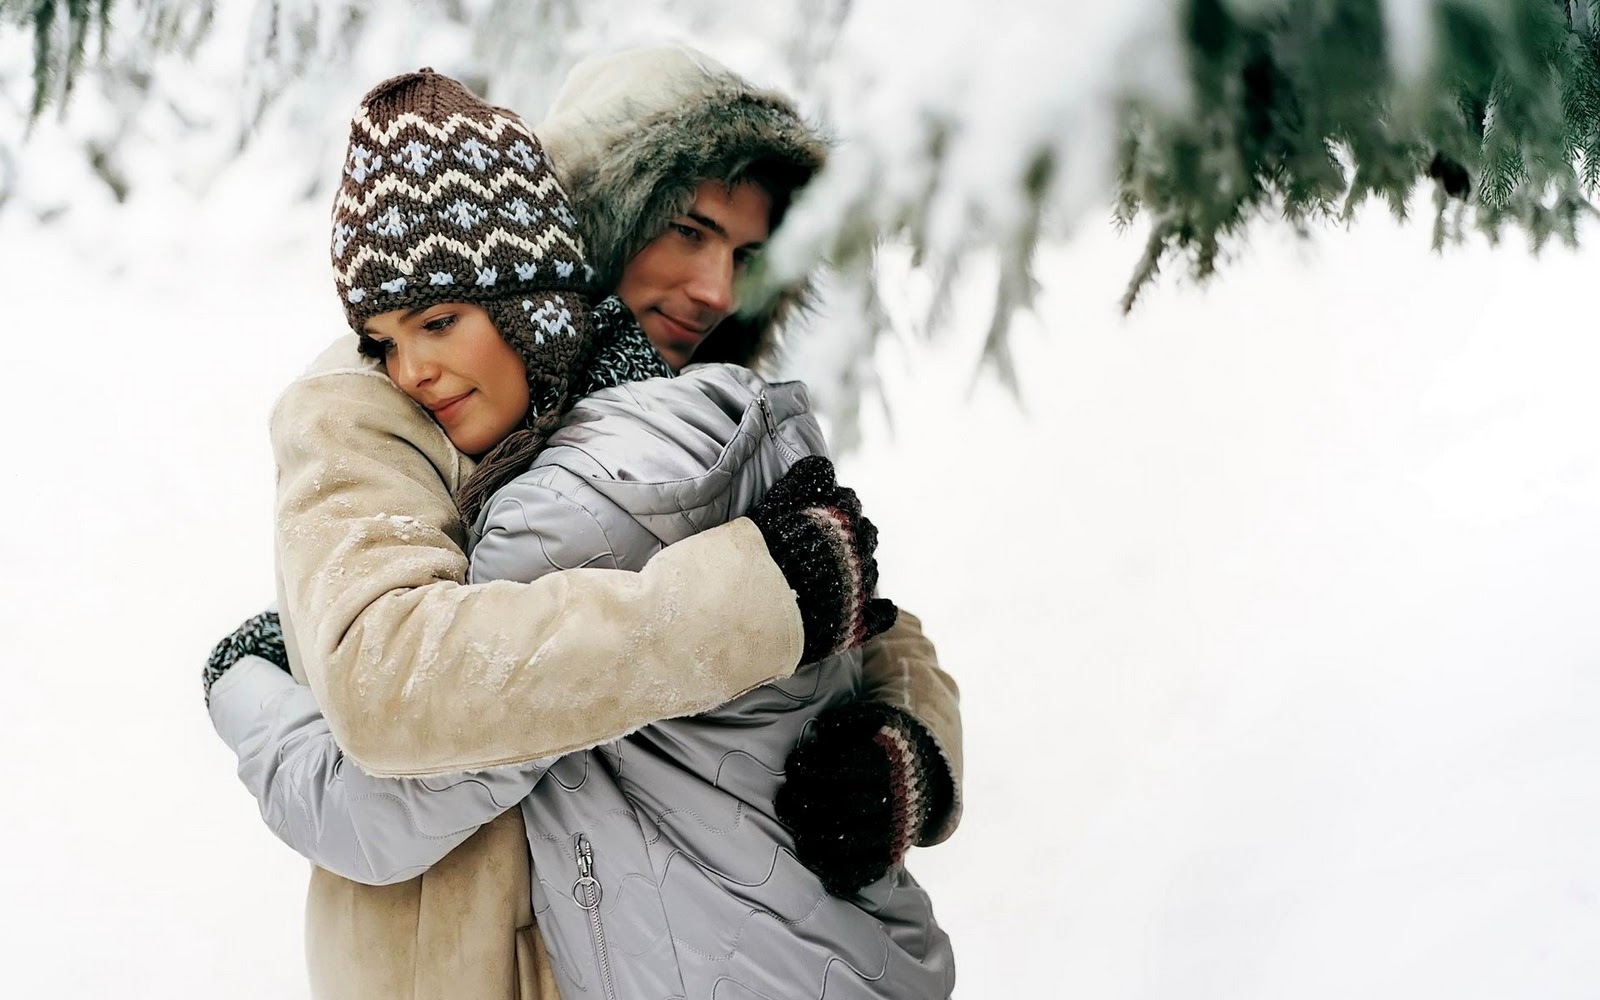 https://blogger.googleusercontent.com/img/b/R29vZ2xl/AVvXsEgYFn2zsCNlnF6f2RRAJ5TWTTdLLtAYKAZtTRTqWKIYoia84DITk43AEa9BZSSBQgeByPhlMLjBtbT4TC9UozT3zTOKWvsttkfd0CRyMfmmaL89fmY2vV1JSwKKoqdEYkuUPmPvjHJ68rI/s1600/Winter+Snow+Steam+Love+Hugs+Sweet+Smile+HD+Wallpaper+-+LoveWallpapers4u_Blogspot_Com.jpg